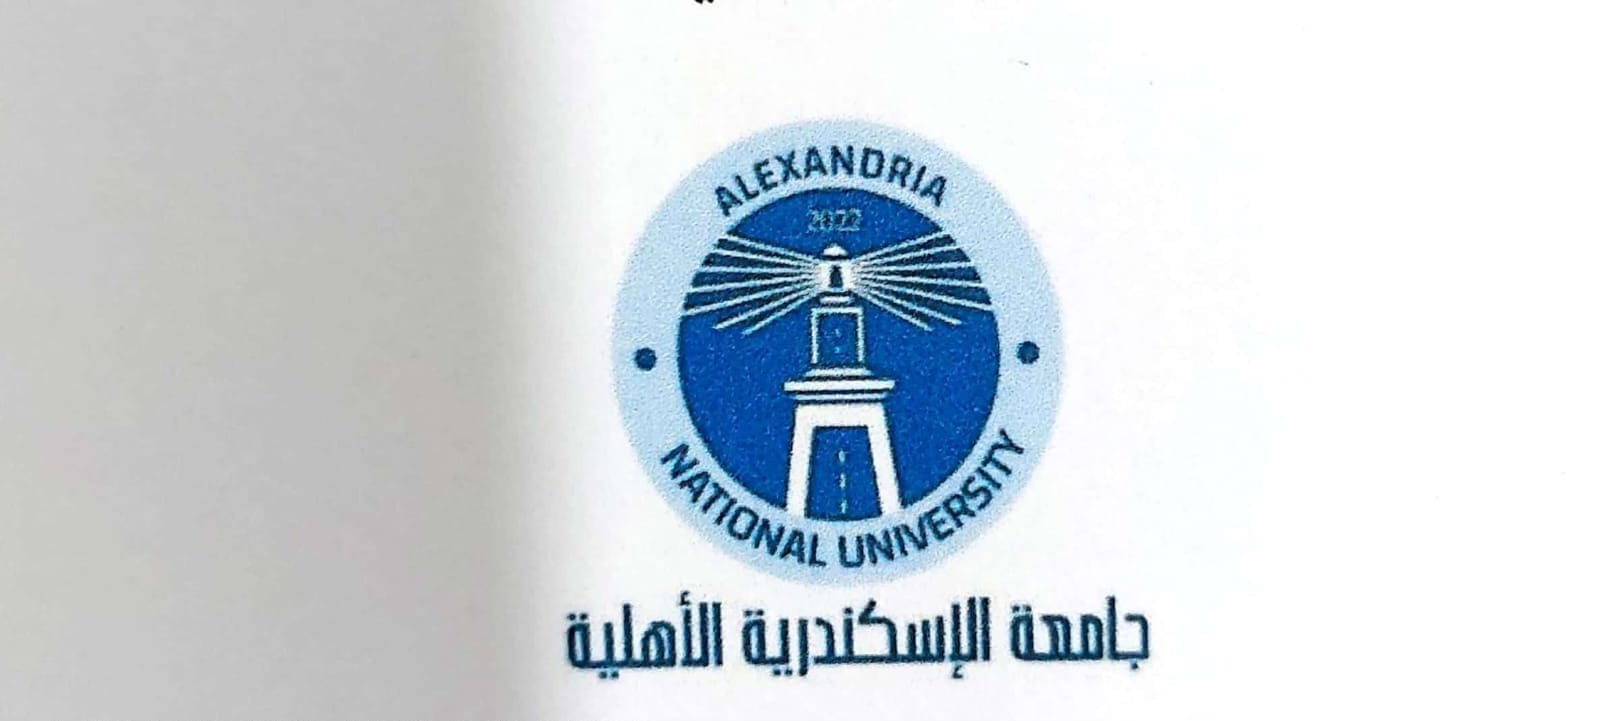 alexandria.national.university2022